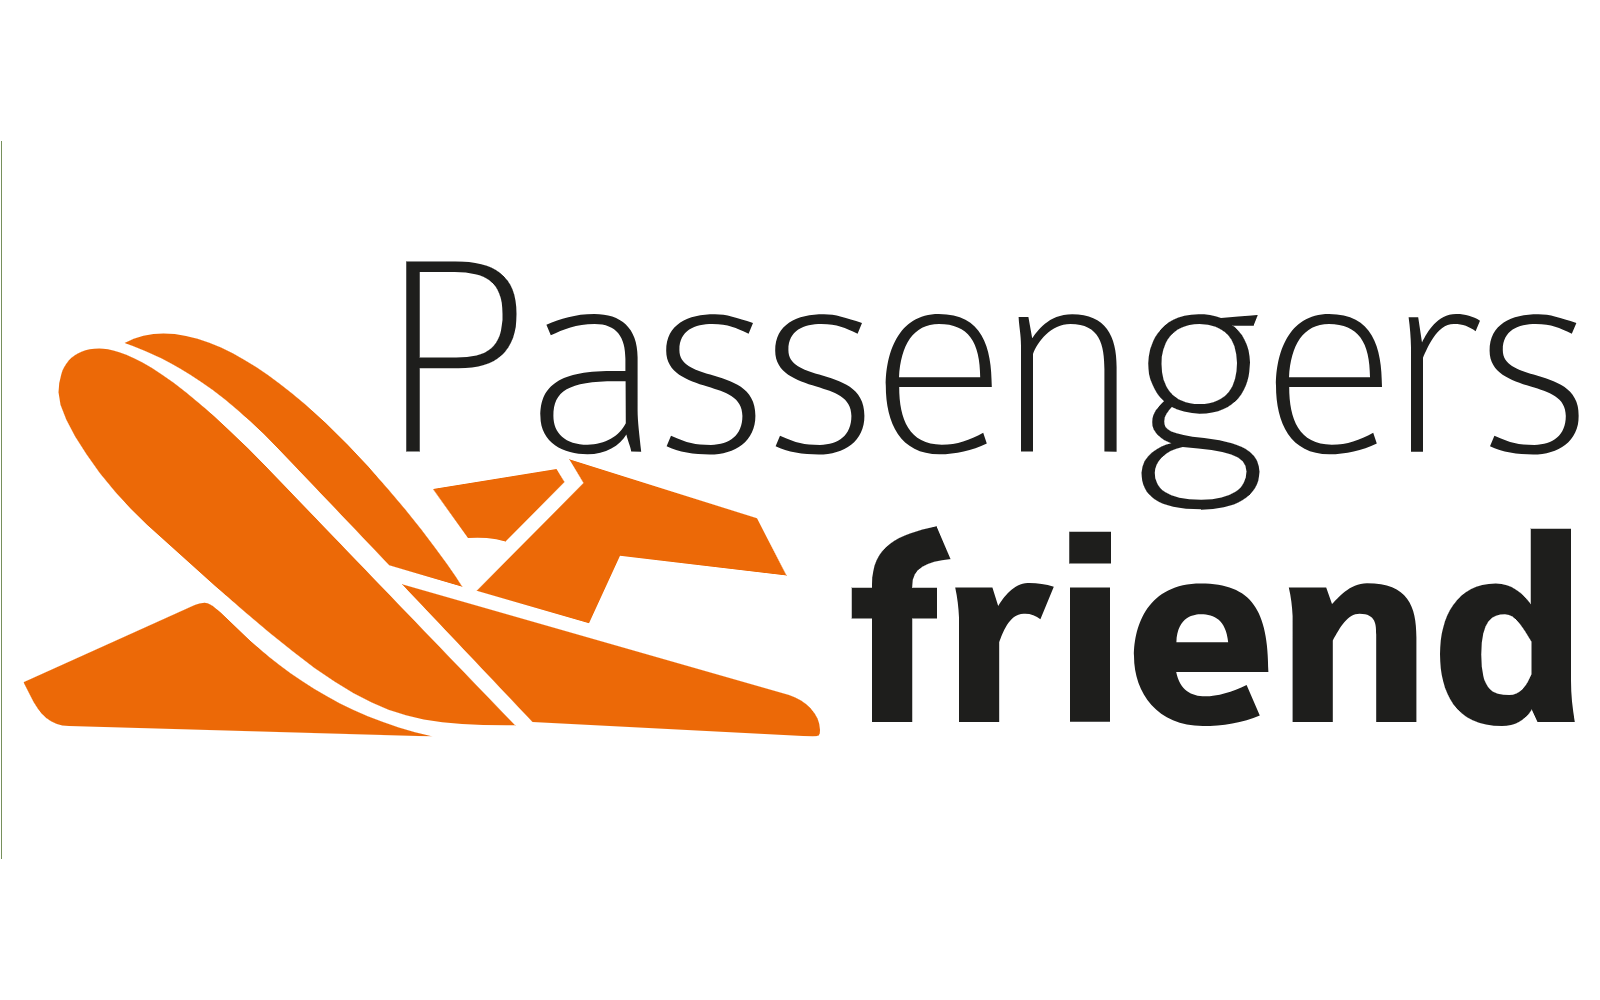 Passengers friend logo